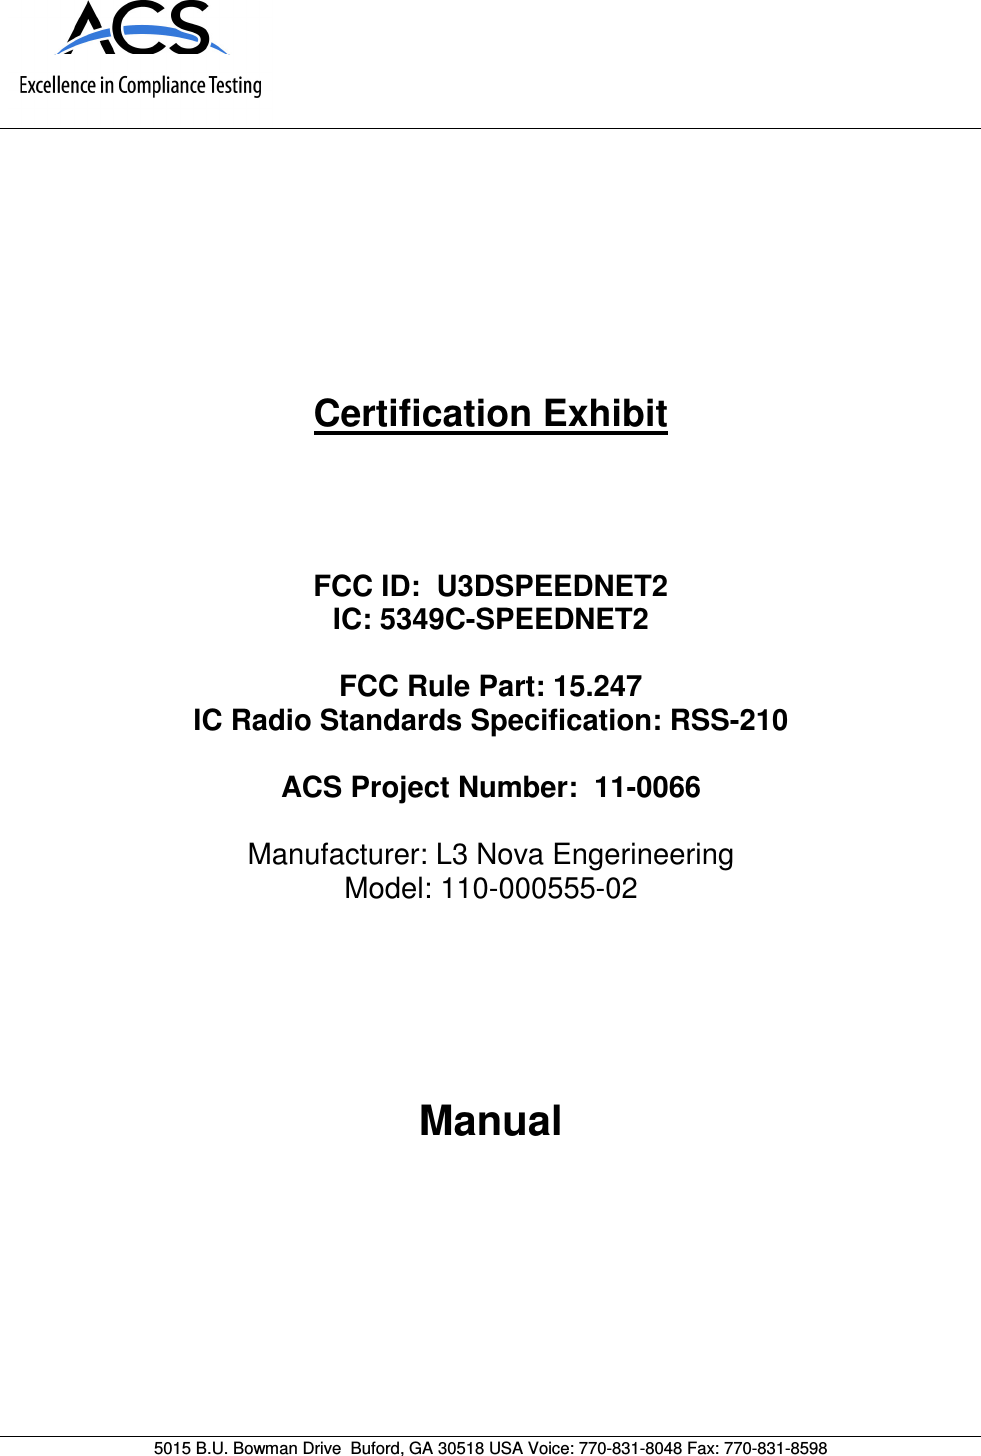      5015 B.U. Bowman Drive  Buford, GA 30518 USA Voice: 770-831-8048 Fax: 770-831-8598   Certification Exhibit     FCC ID:  U3DSPEEDNET2 IC: 5349C-SPEEDNET2  FCC Rule Part: 15.247 IC Radio Standards Specification: RSS-210  ACS Project Number:  11-0066   Manufacturer: L3 Nova Engerineering Model: 110-000555-02     Manual  